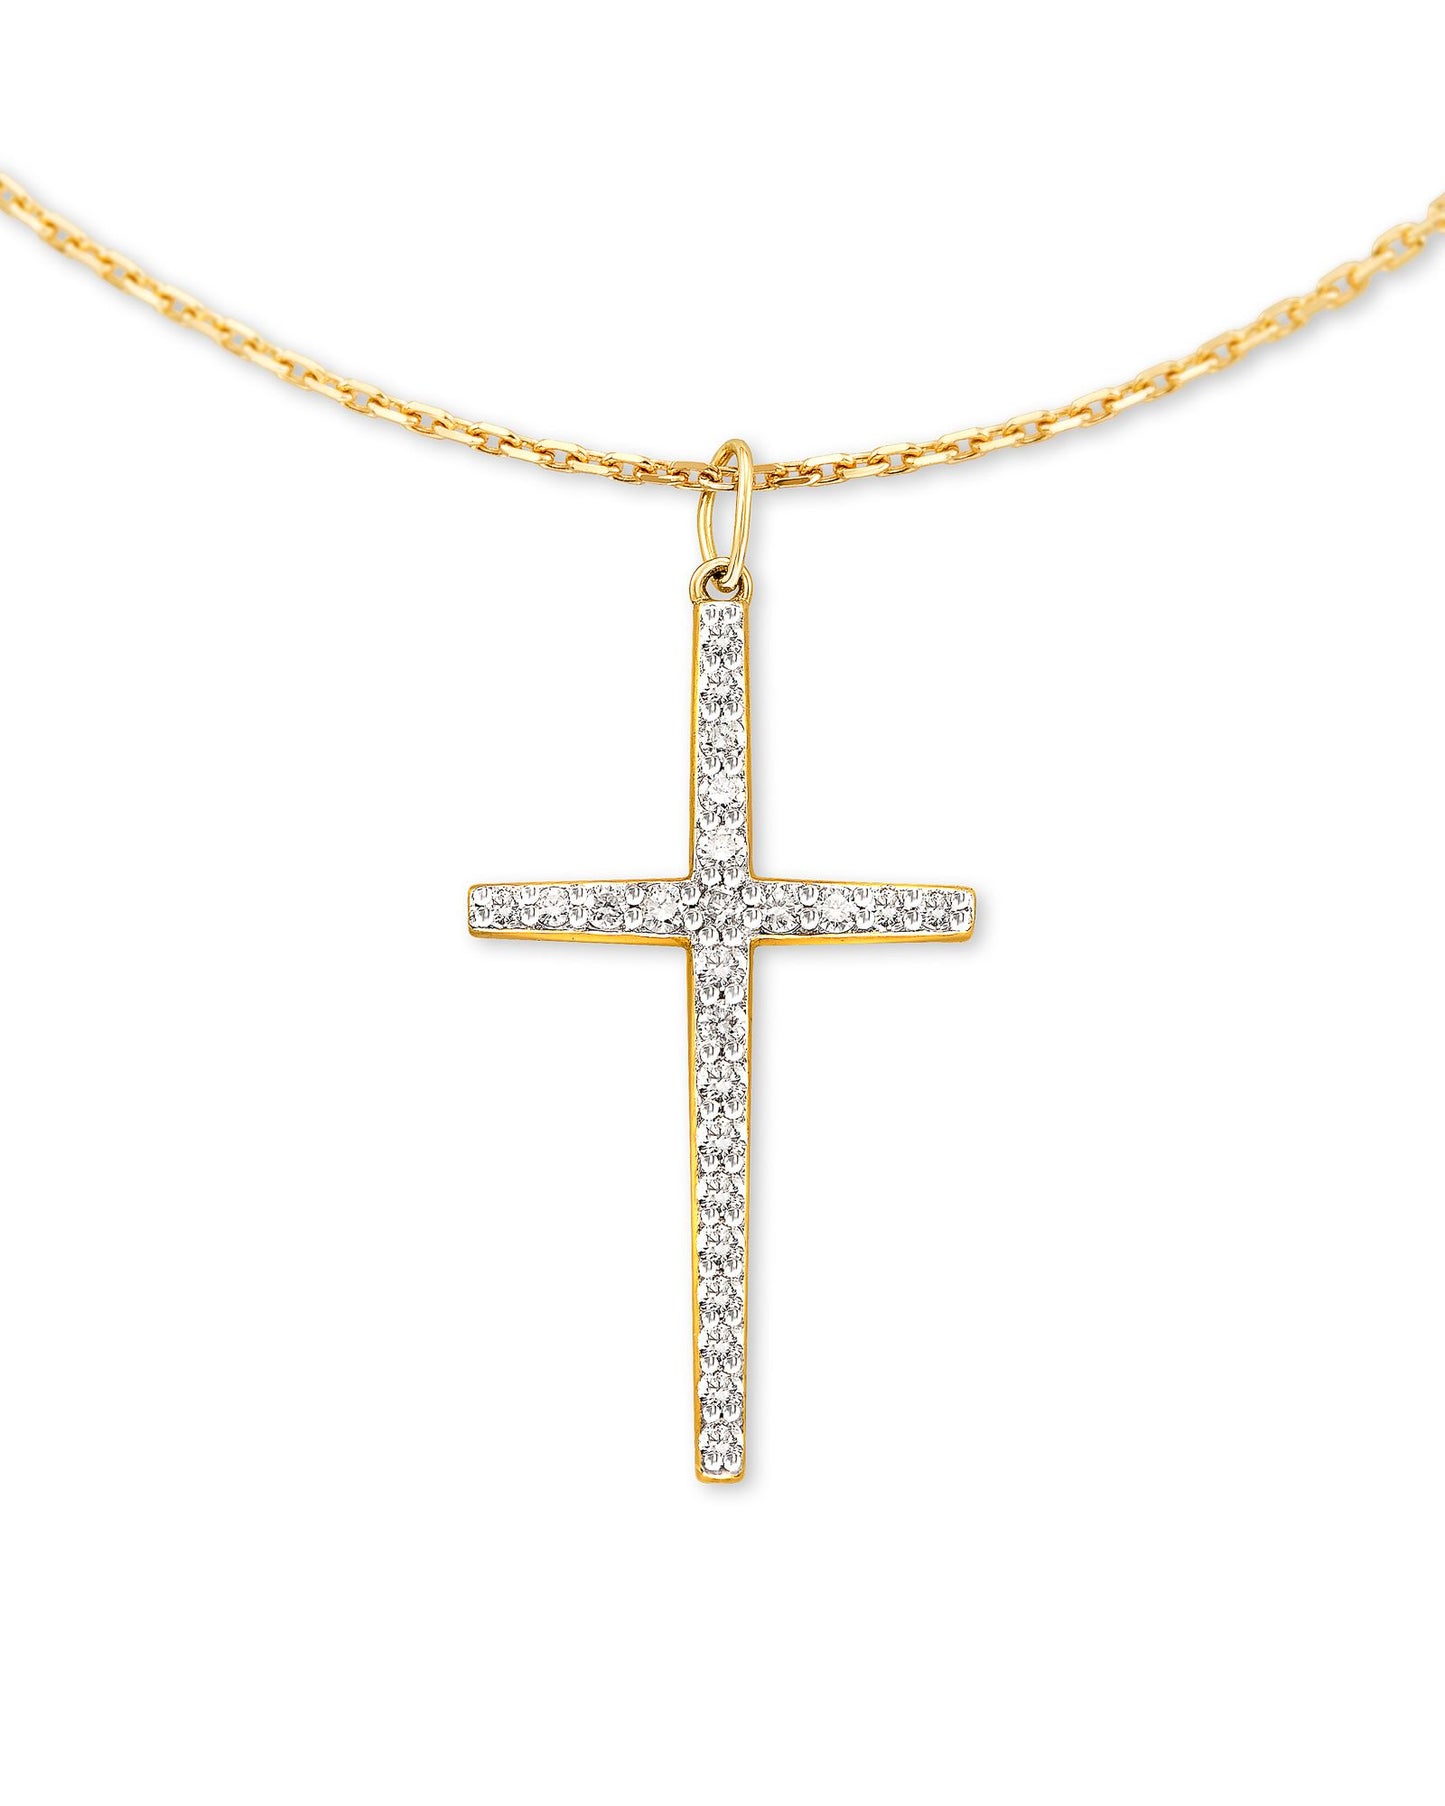 Kendra Scott Large Cross Pendant Necklace 14K Gold White Diamond-Necklaces-Kendra Scott-N1534GLD-The Twisted Chandelier